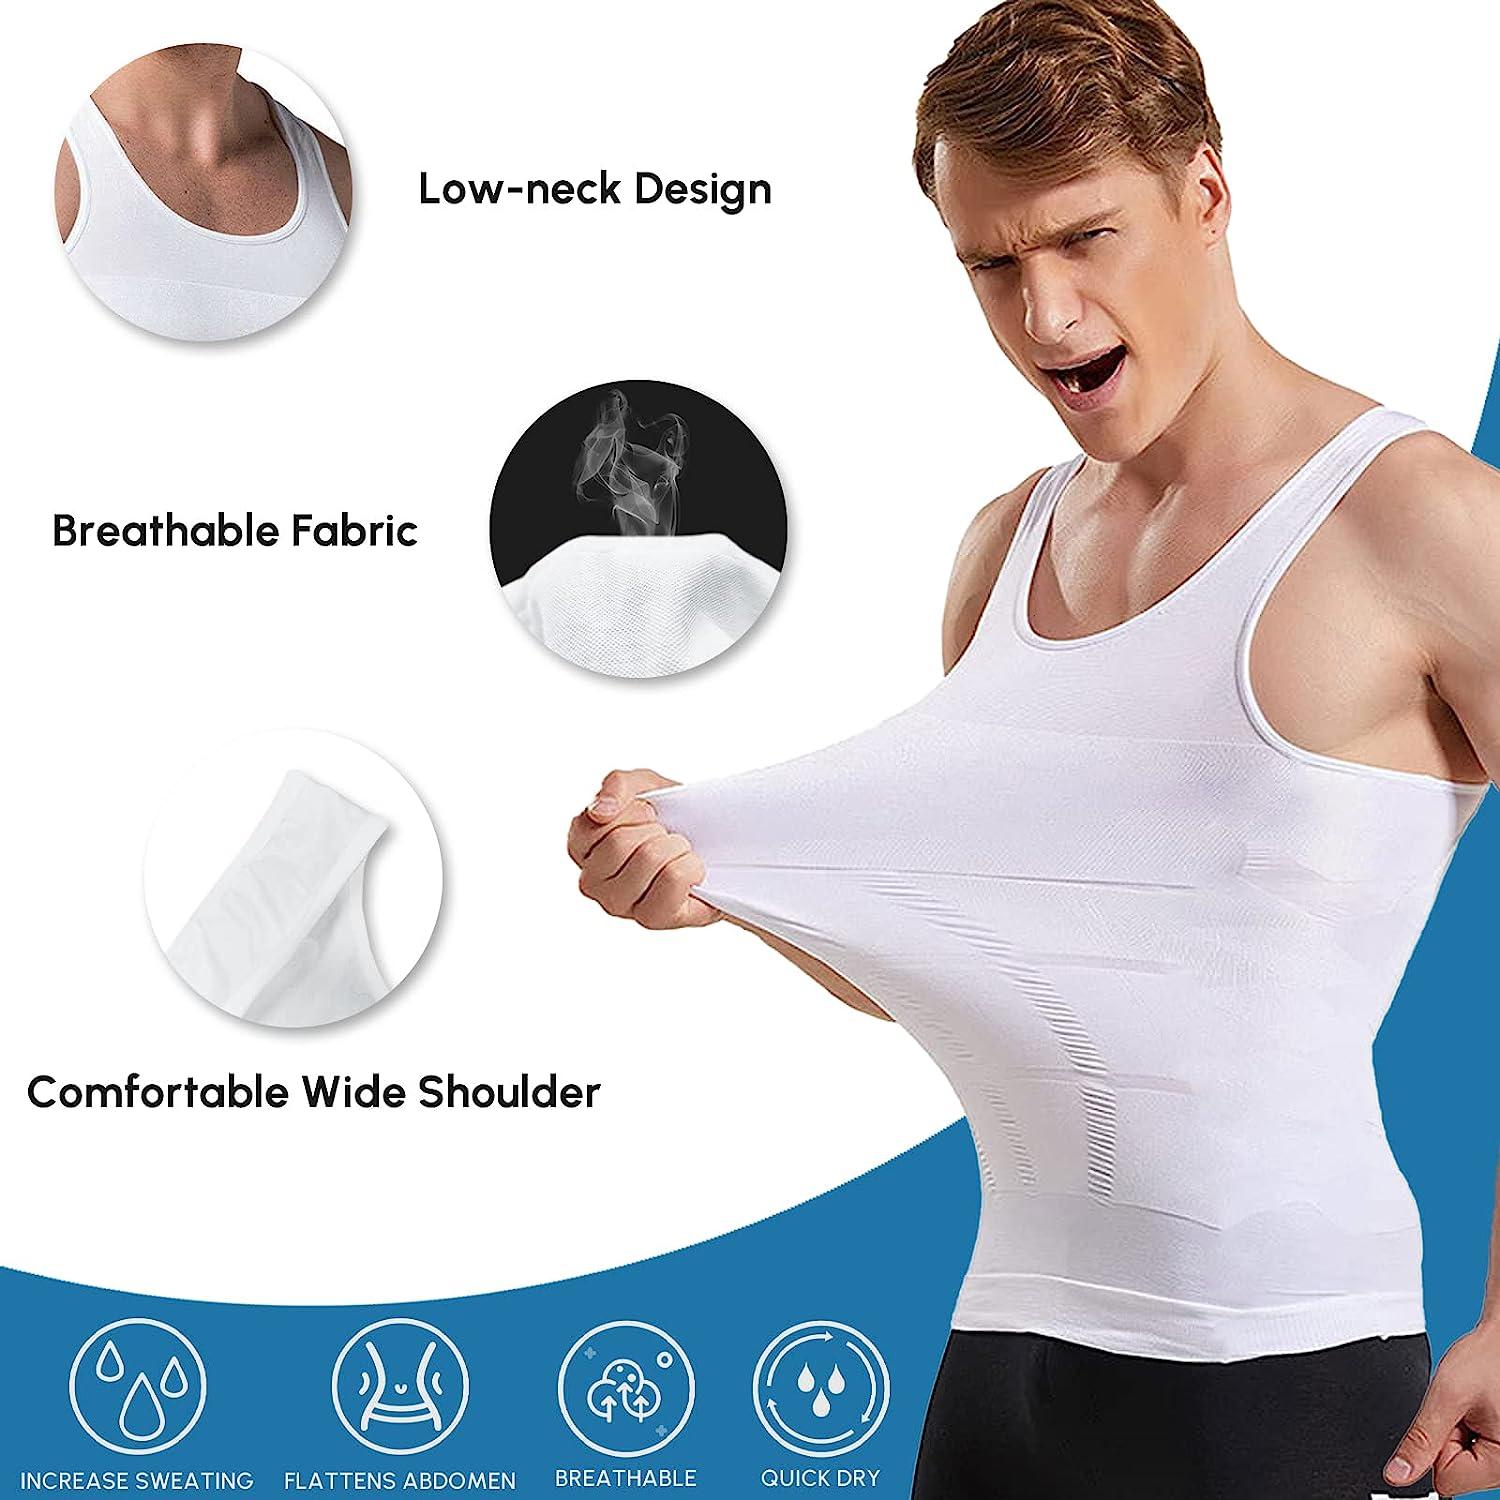 Aptoco Compression Shirts for Men Slimming,Men Body Shaper Abs